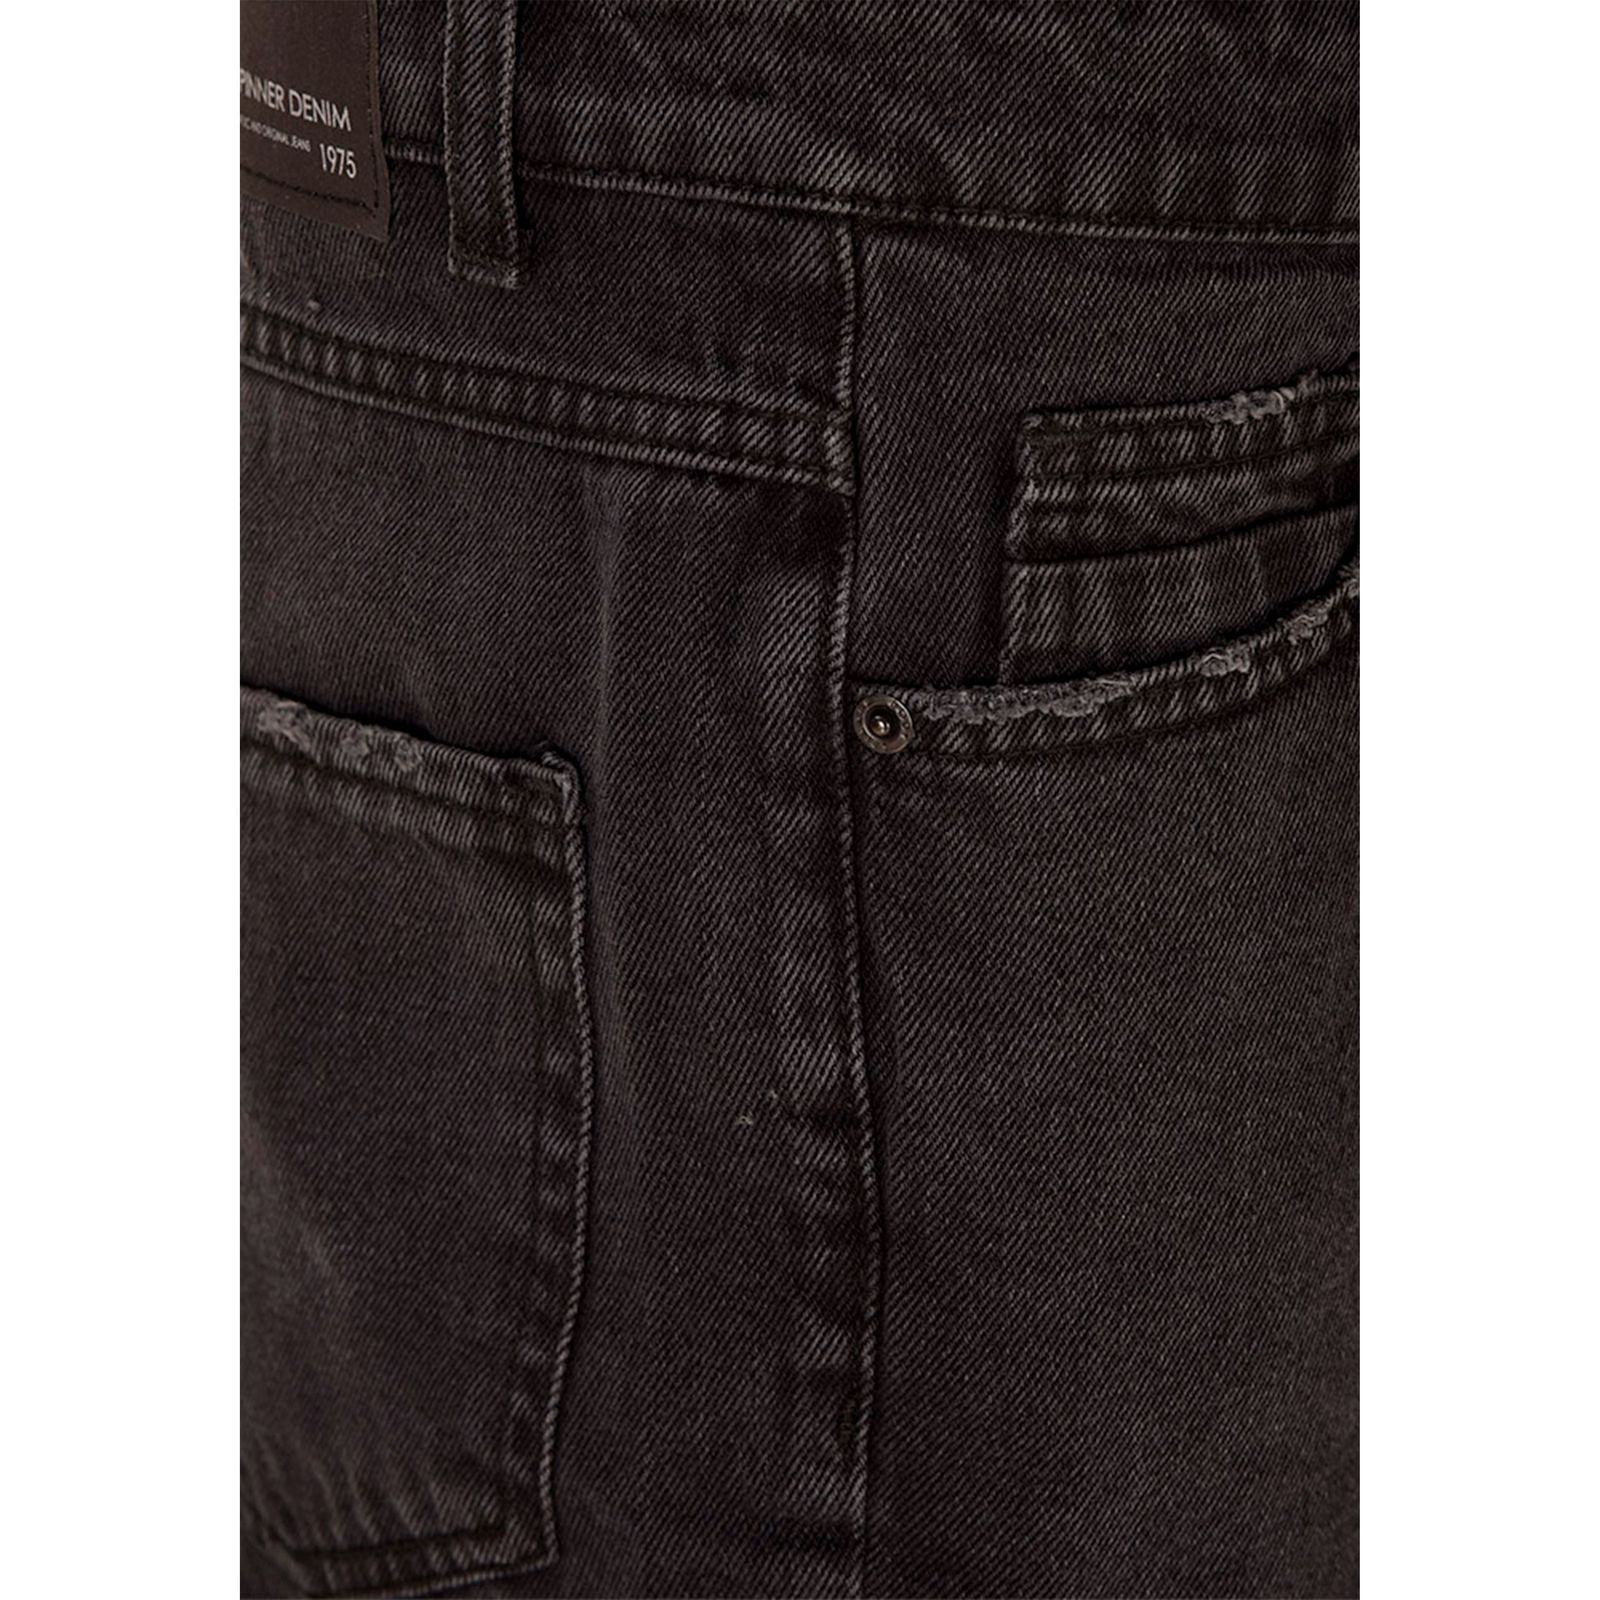 شلوار جین مردانه بادی اسپینر مدل 2555 کد 1 رنگ ذغالی -  - 2